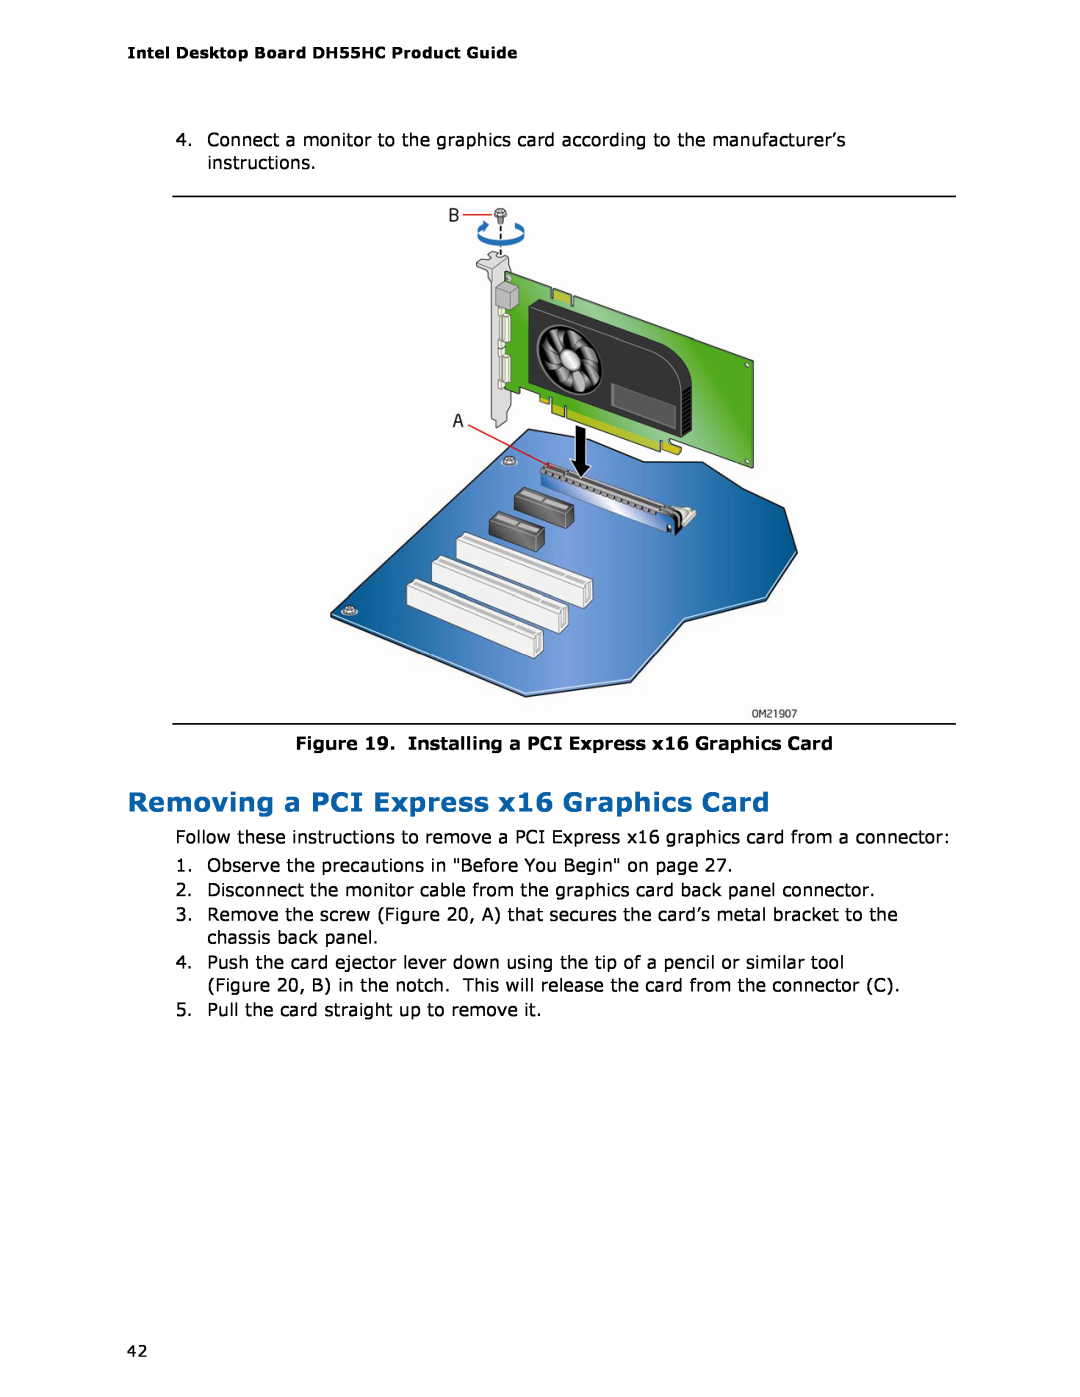 Intel BOXDH55HC manual Removing a PCI Express x16 Graphics Card, Installing a PCI Express x16 Graphics Card 